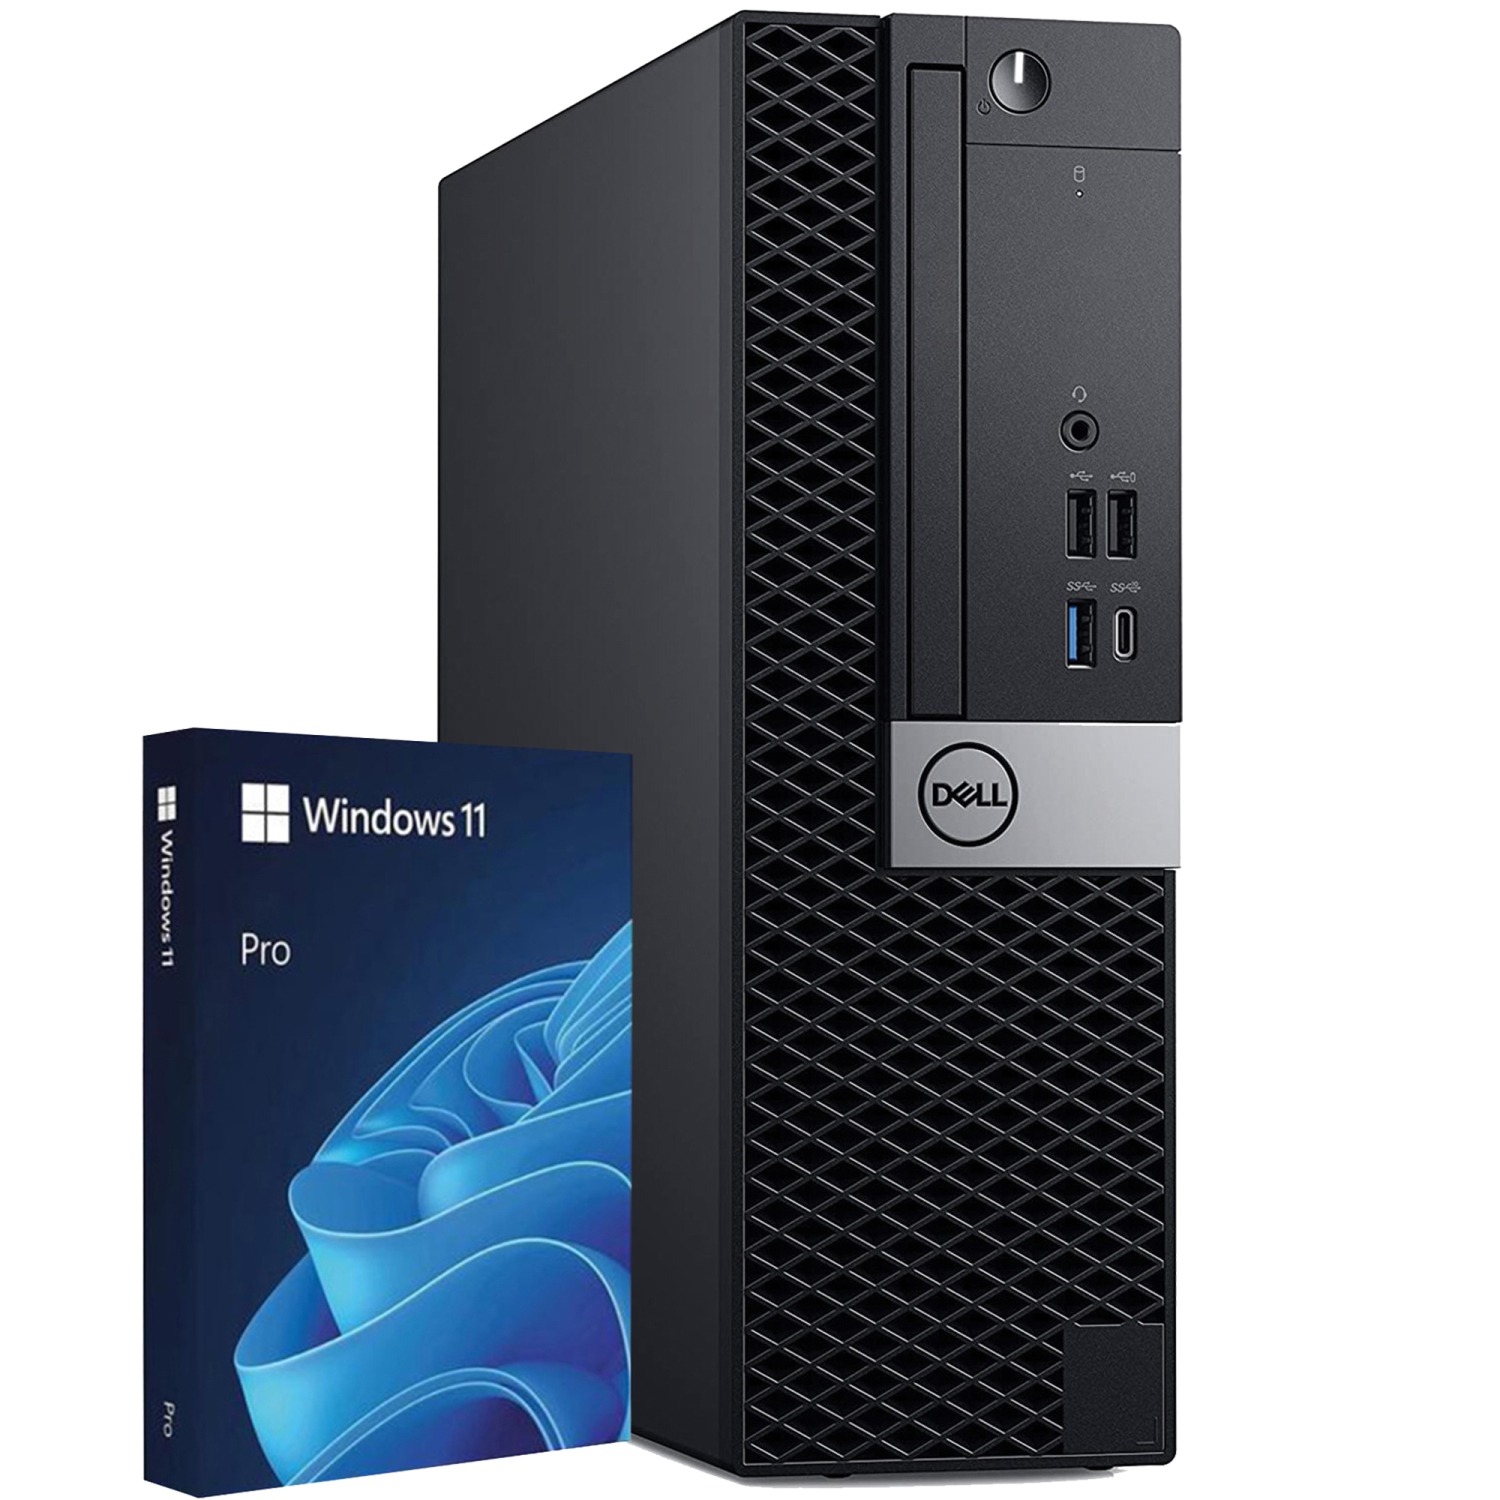 Refurbished (Good) - Professional Desktop PC Dell OptiPlex SFF Computer (Intel Core i5 9th Gen Processor| 1TB M.2 NVMe SSD| 16GB RAM| Windows 11 Pro| Wireless Keyboard and Mouse)